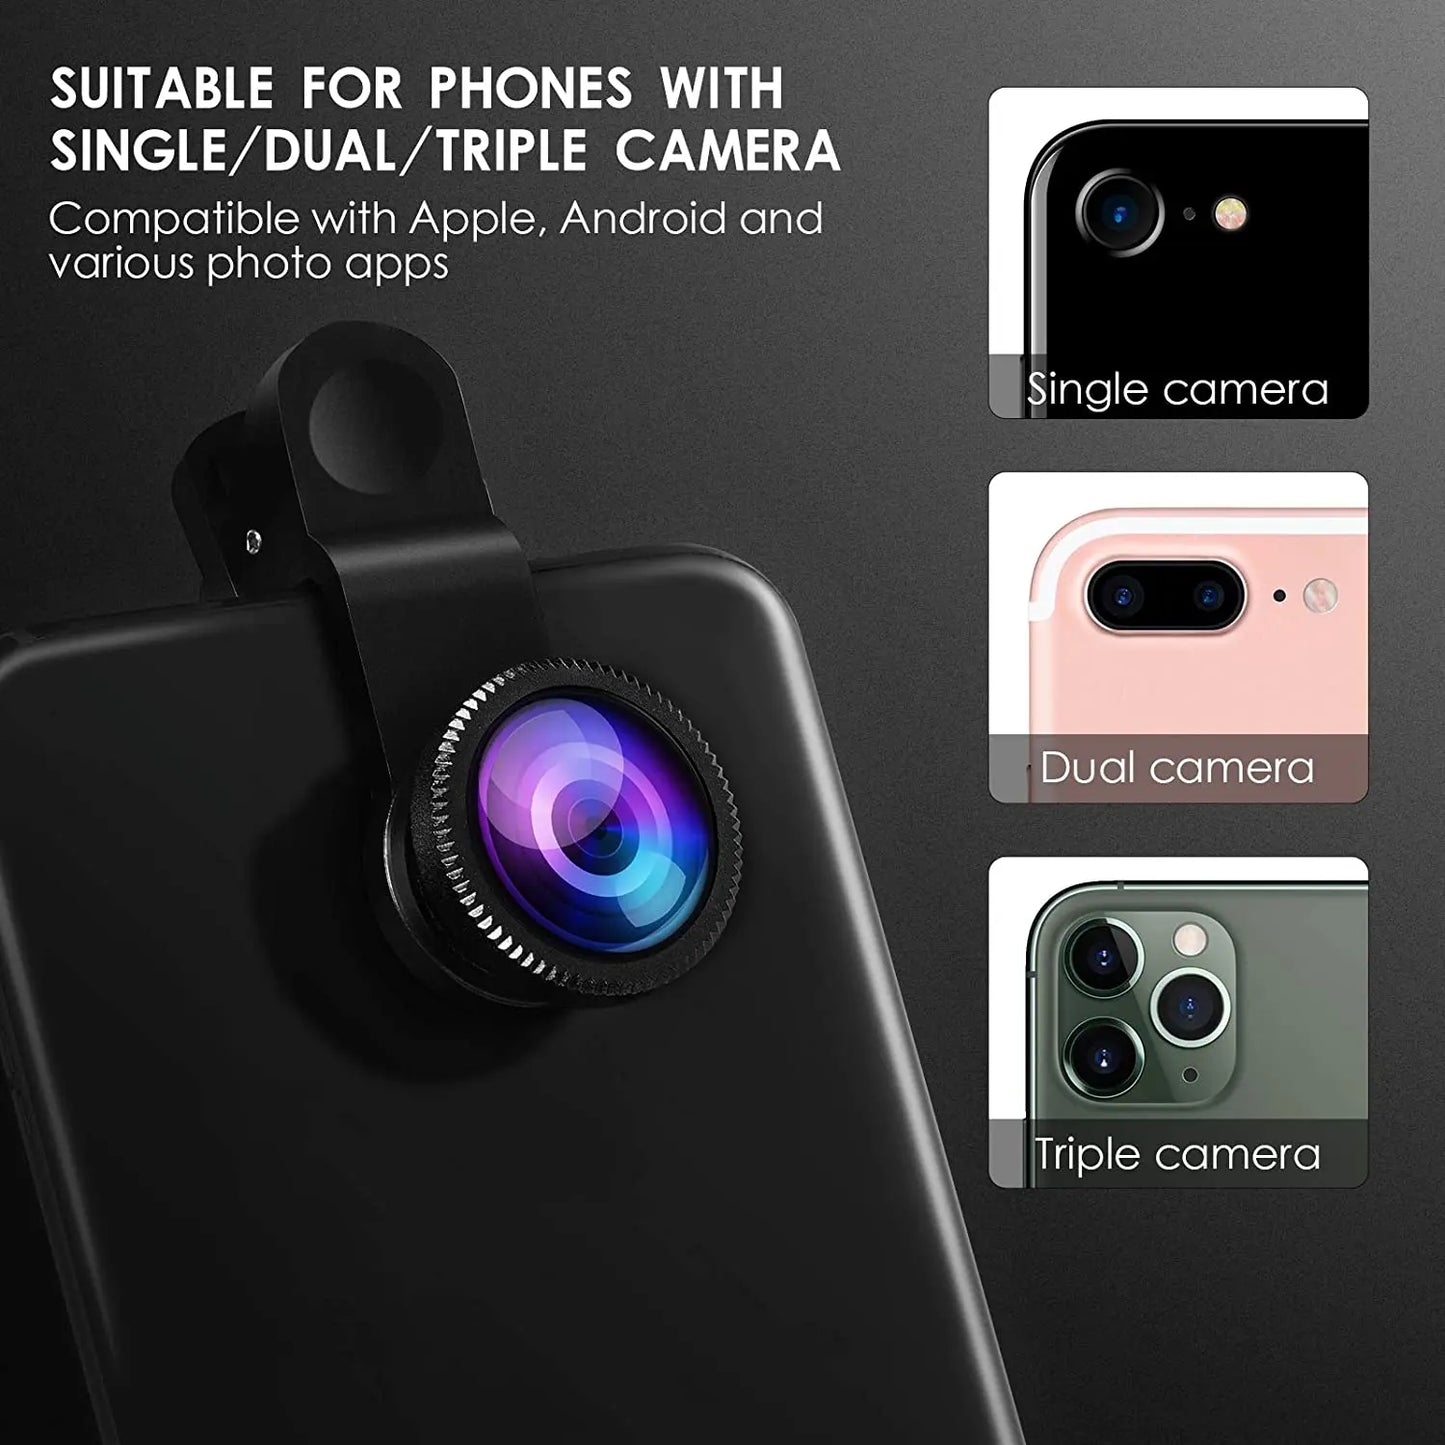 Objectif de téléphone Fisheye 3 en 1 : grand angle 0,67X, zoom Fish Eye, kit d'appareil photo à objectif macro avec clip pour smartphone